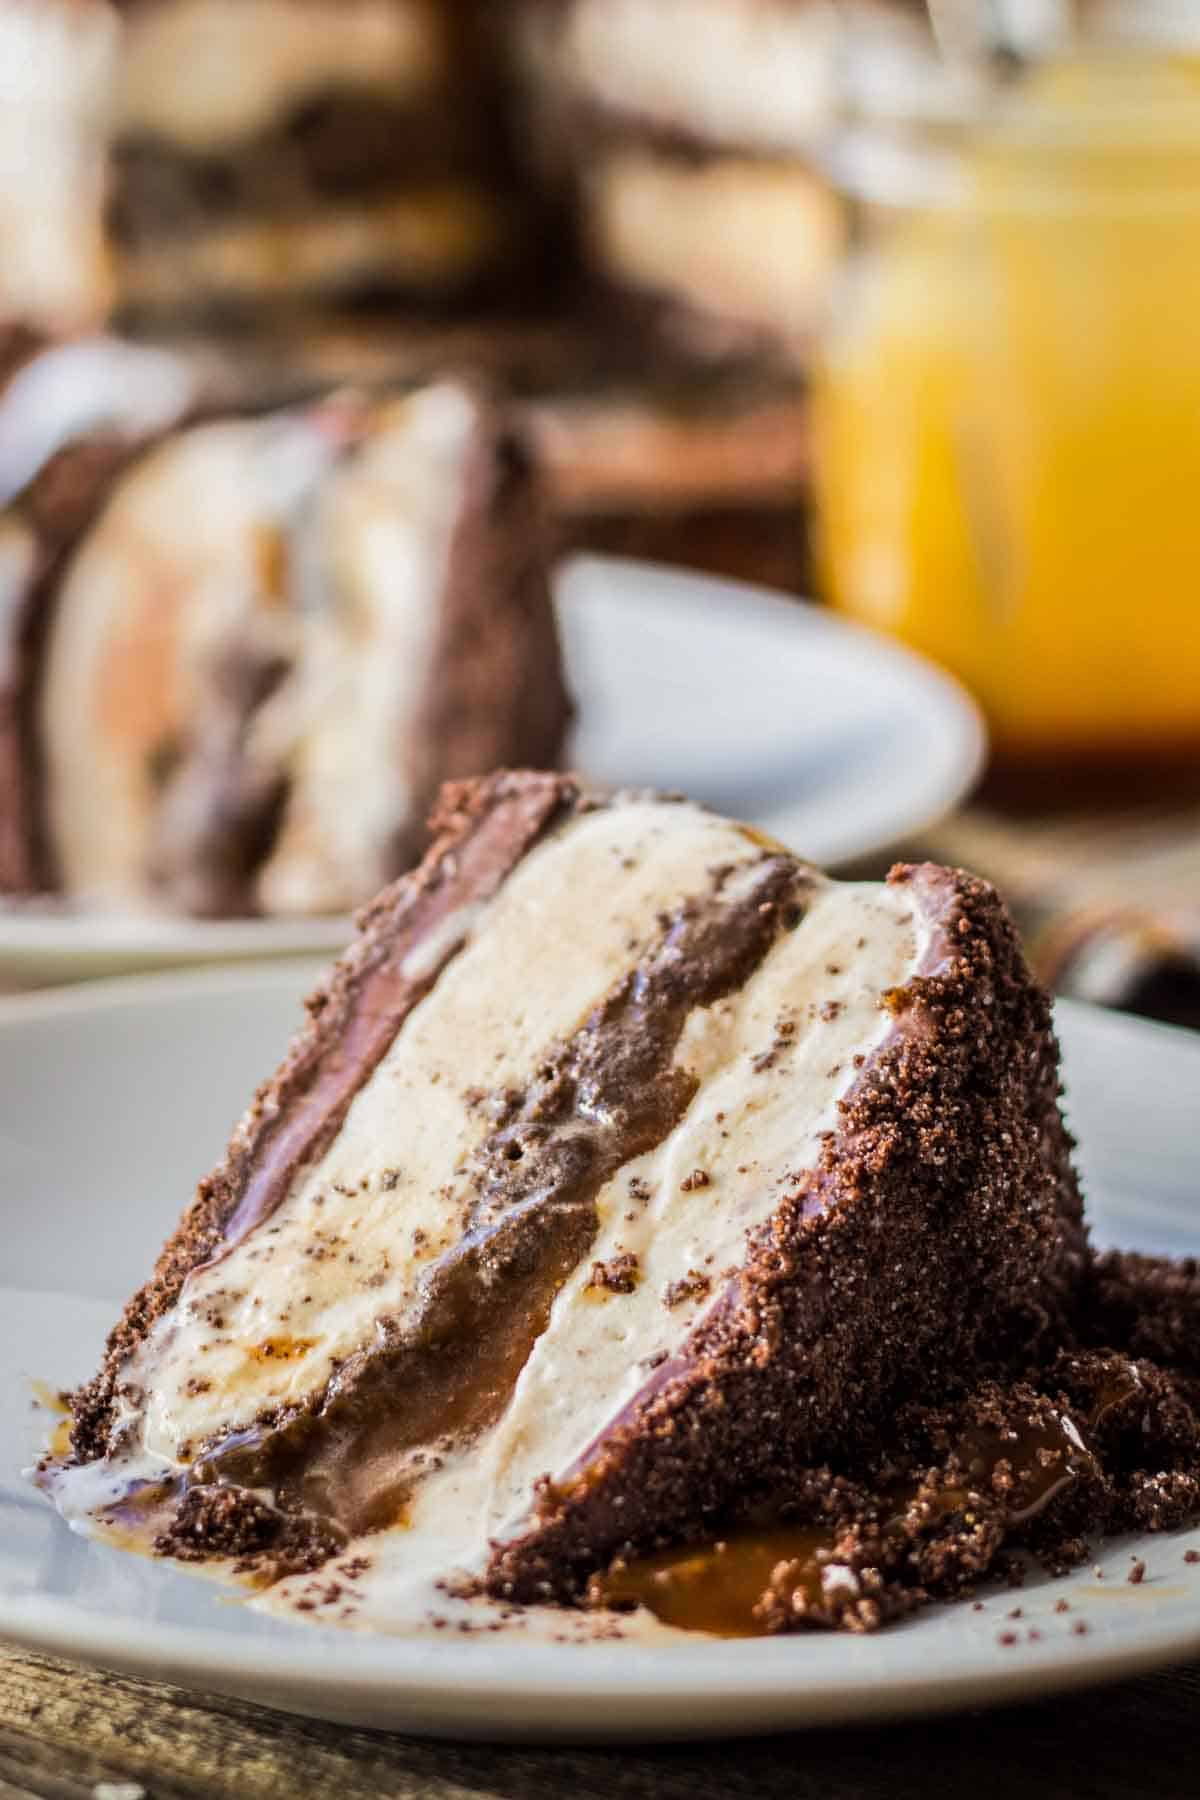 A slice of homemade salted caramel and chocolate ice cream cake.